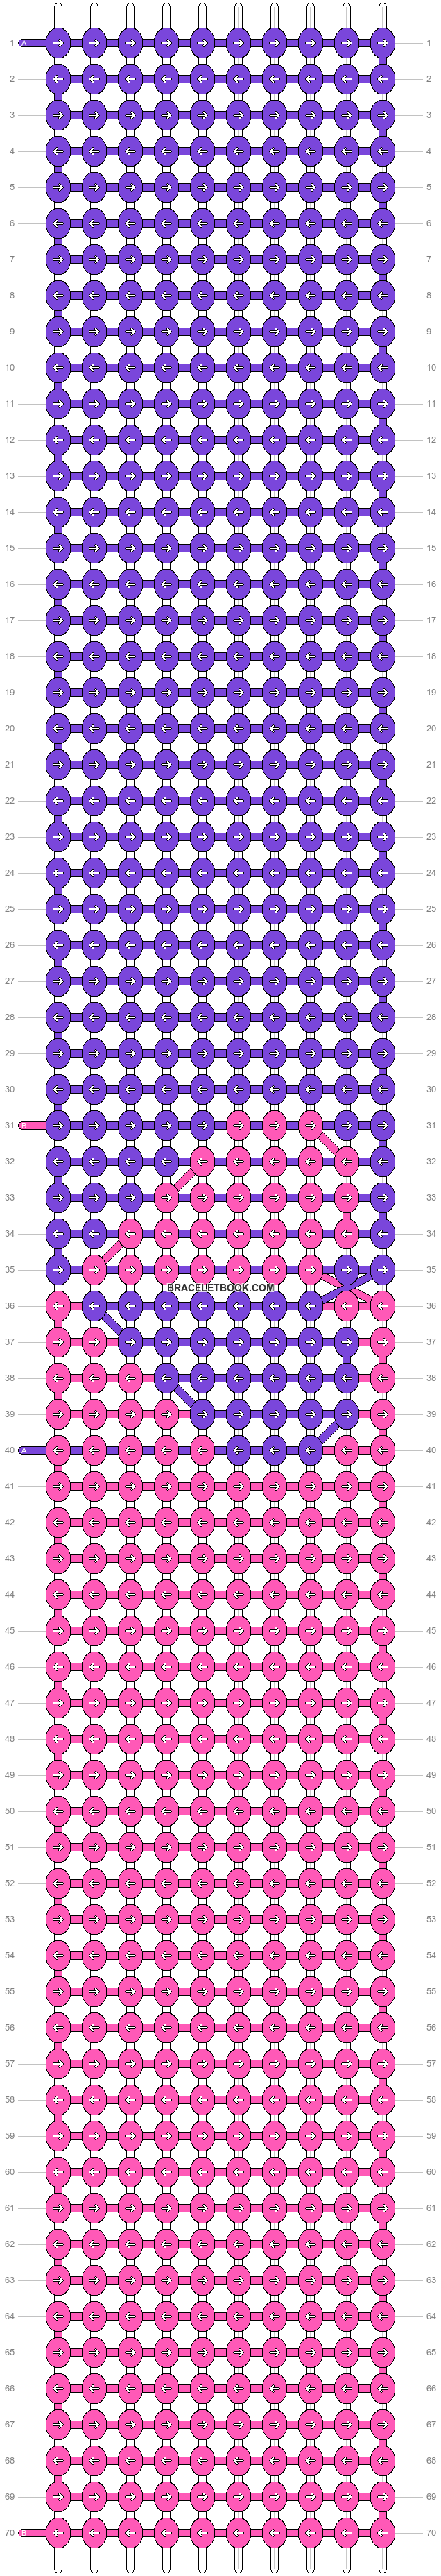 Alpha pattern #29052 variation #16617 pattern